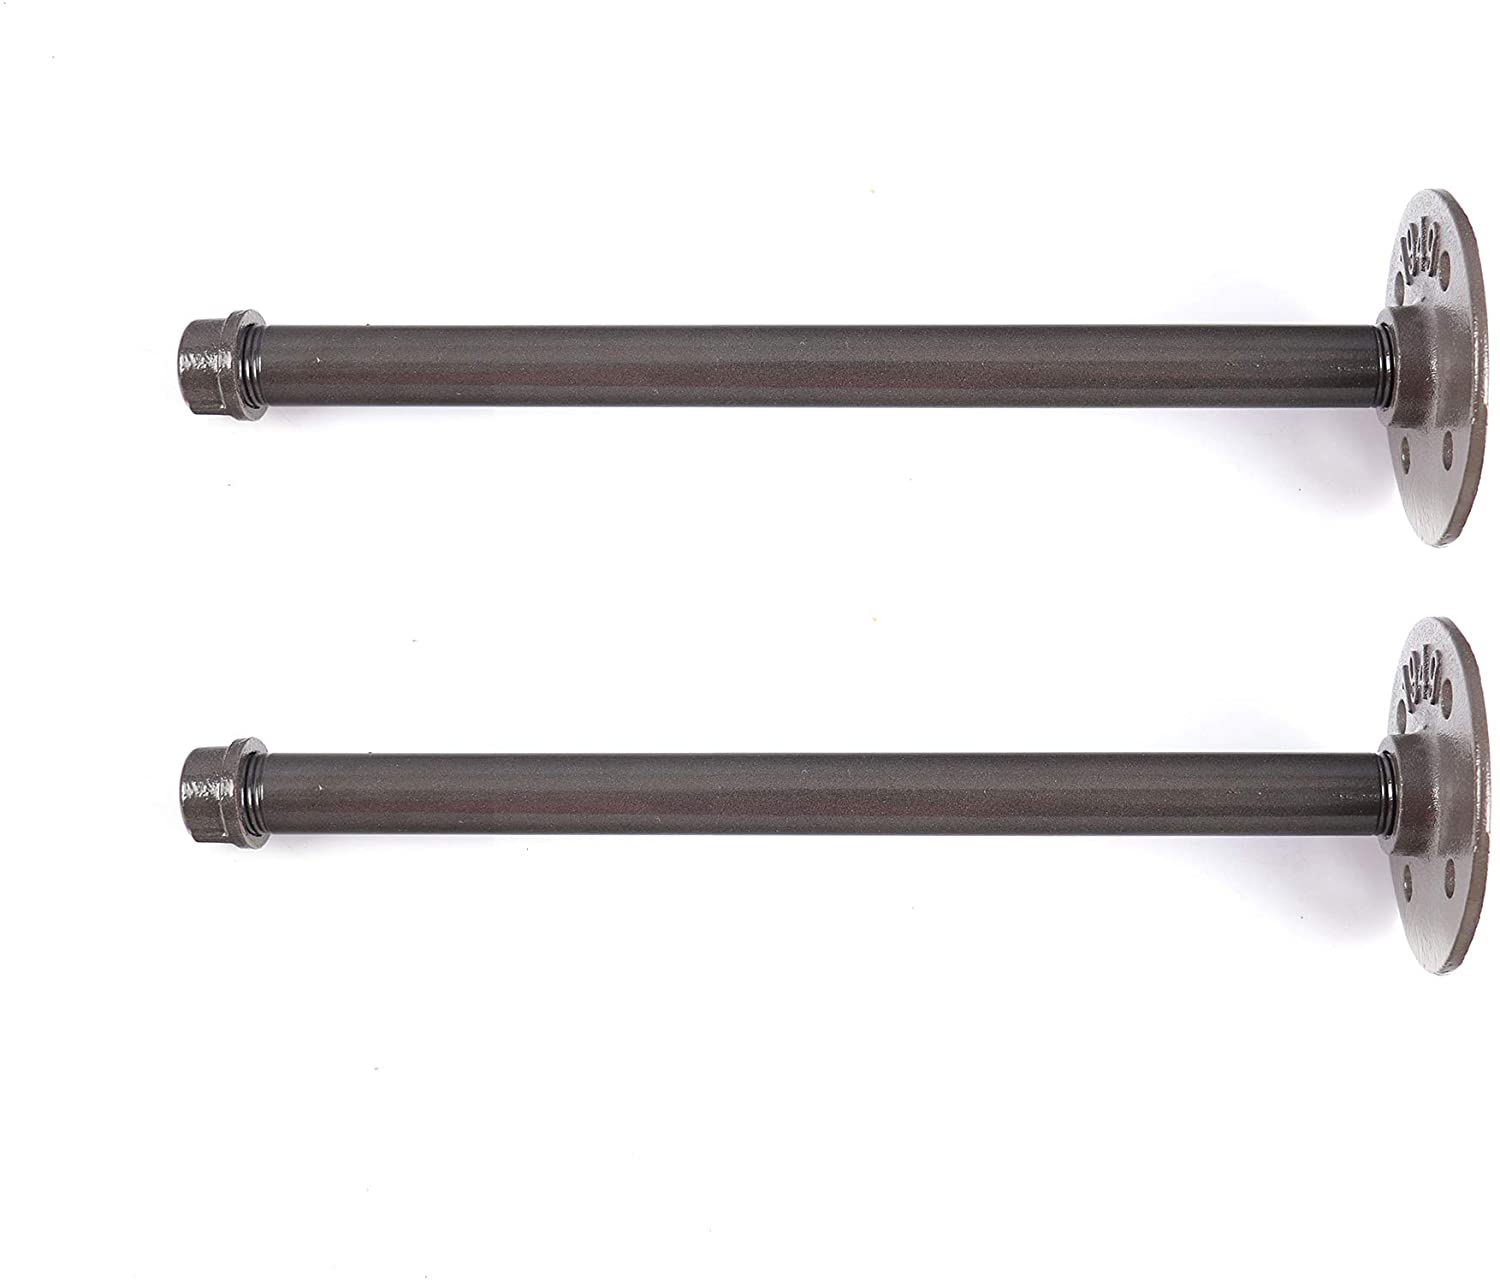 ATT Rustic Floating Shelf Brackets Industrial Iron Pipe Shelf Brackets 20mm Diameter 2 Pack In Grey - image 1 of 1